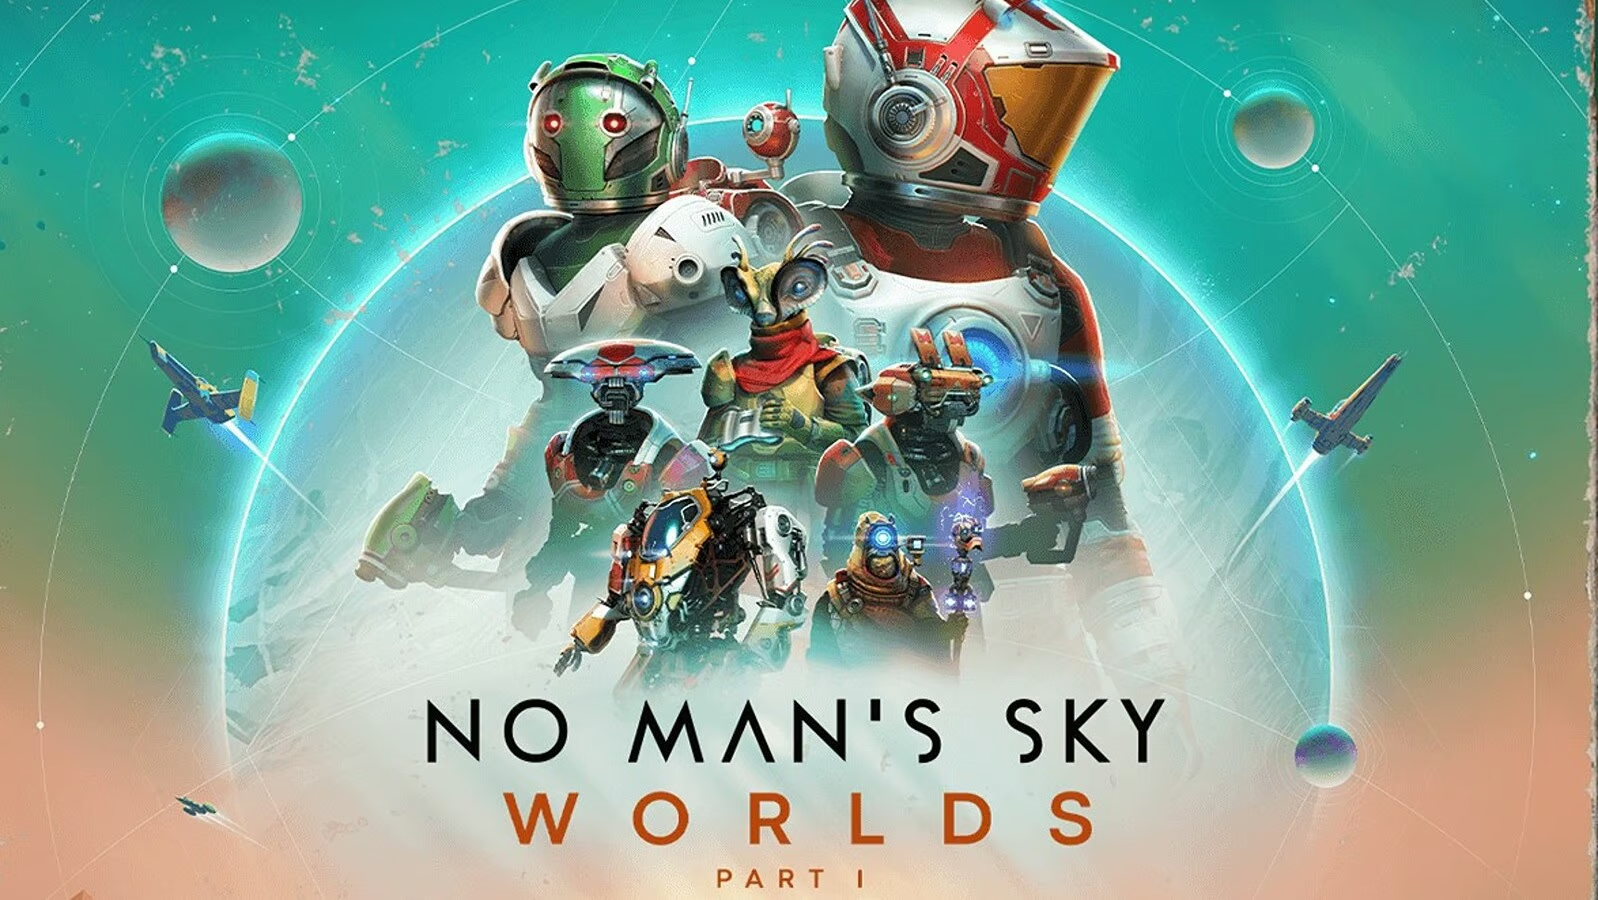 No Man's Sky Worlds Part I update